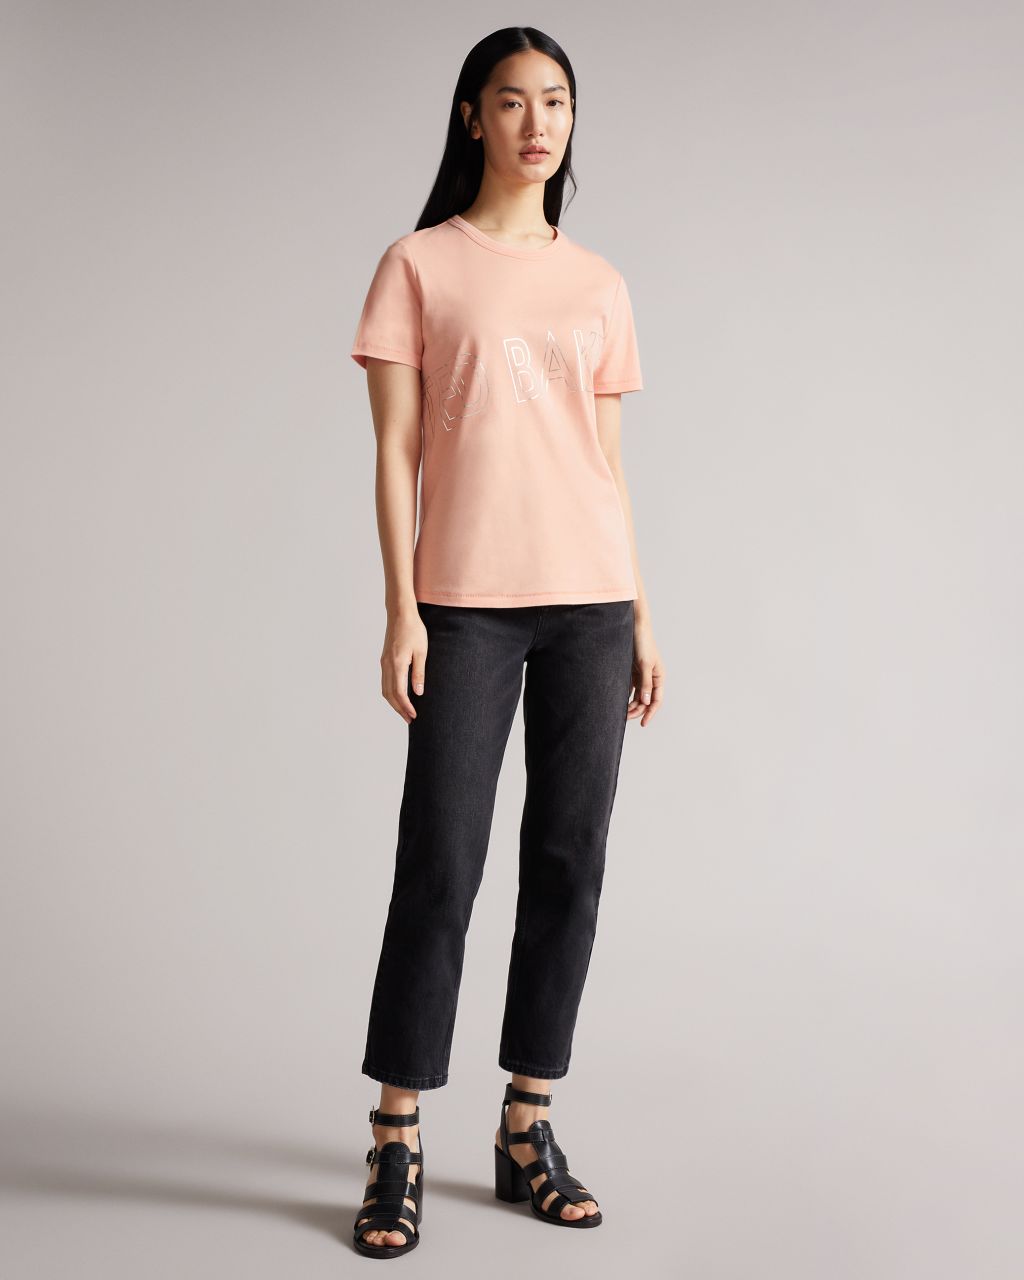 Ted Baker Women's Branded Foil Cotton T-Shirt in Dusky Pink, Malom